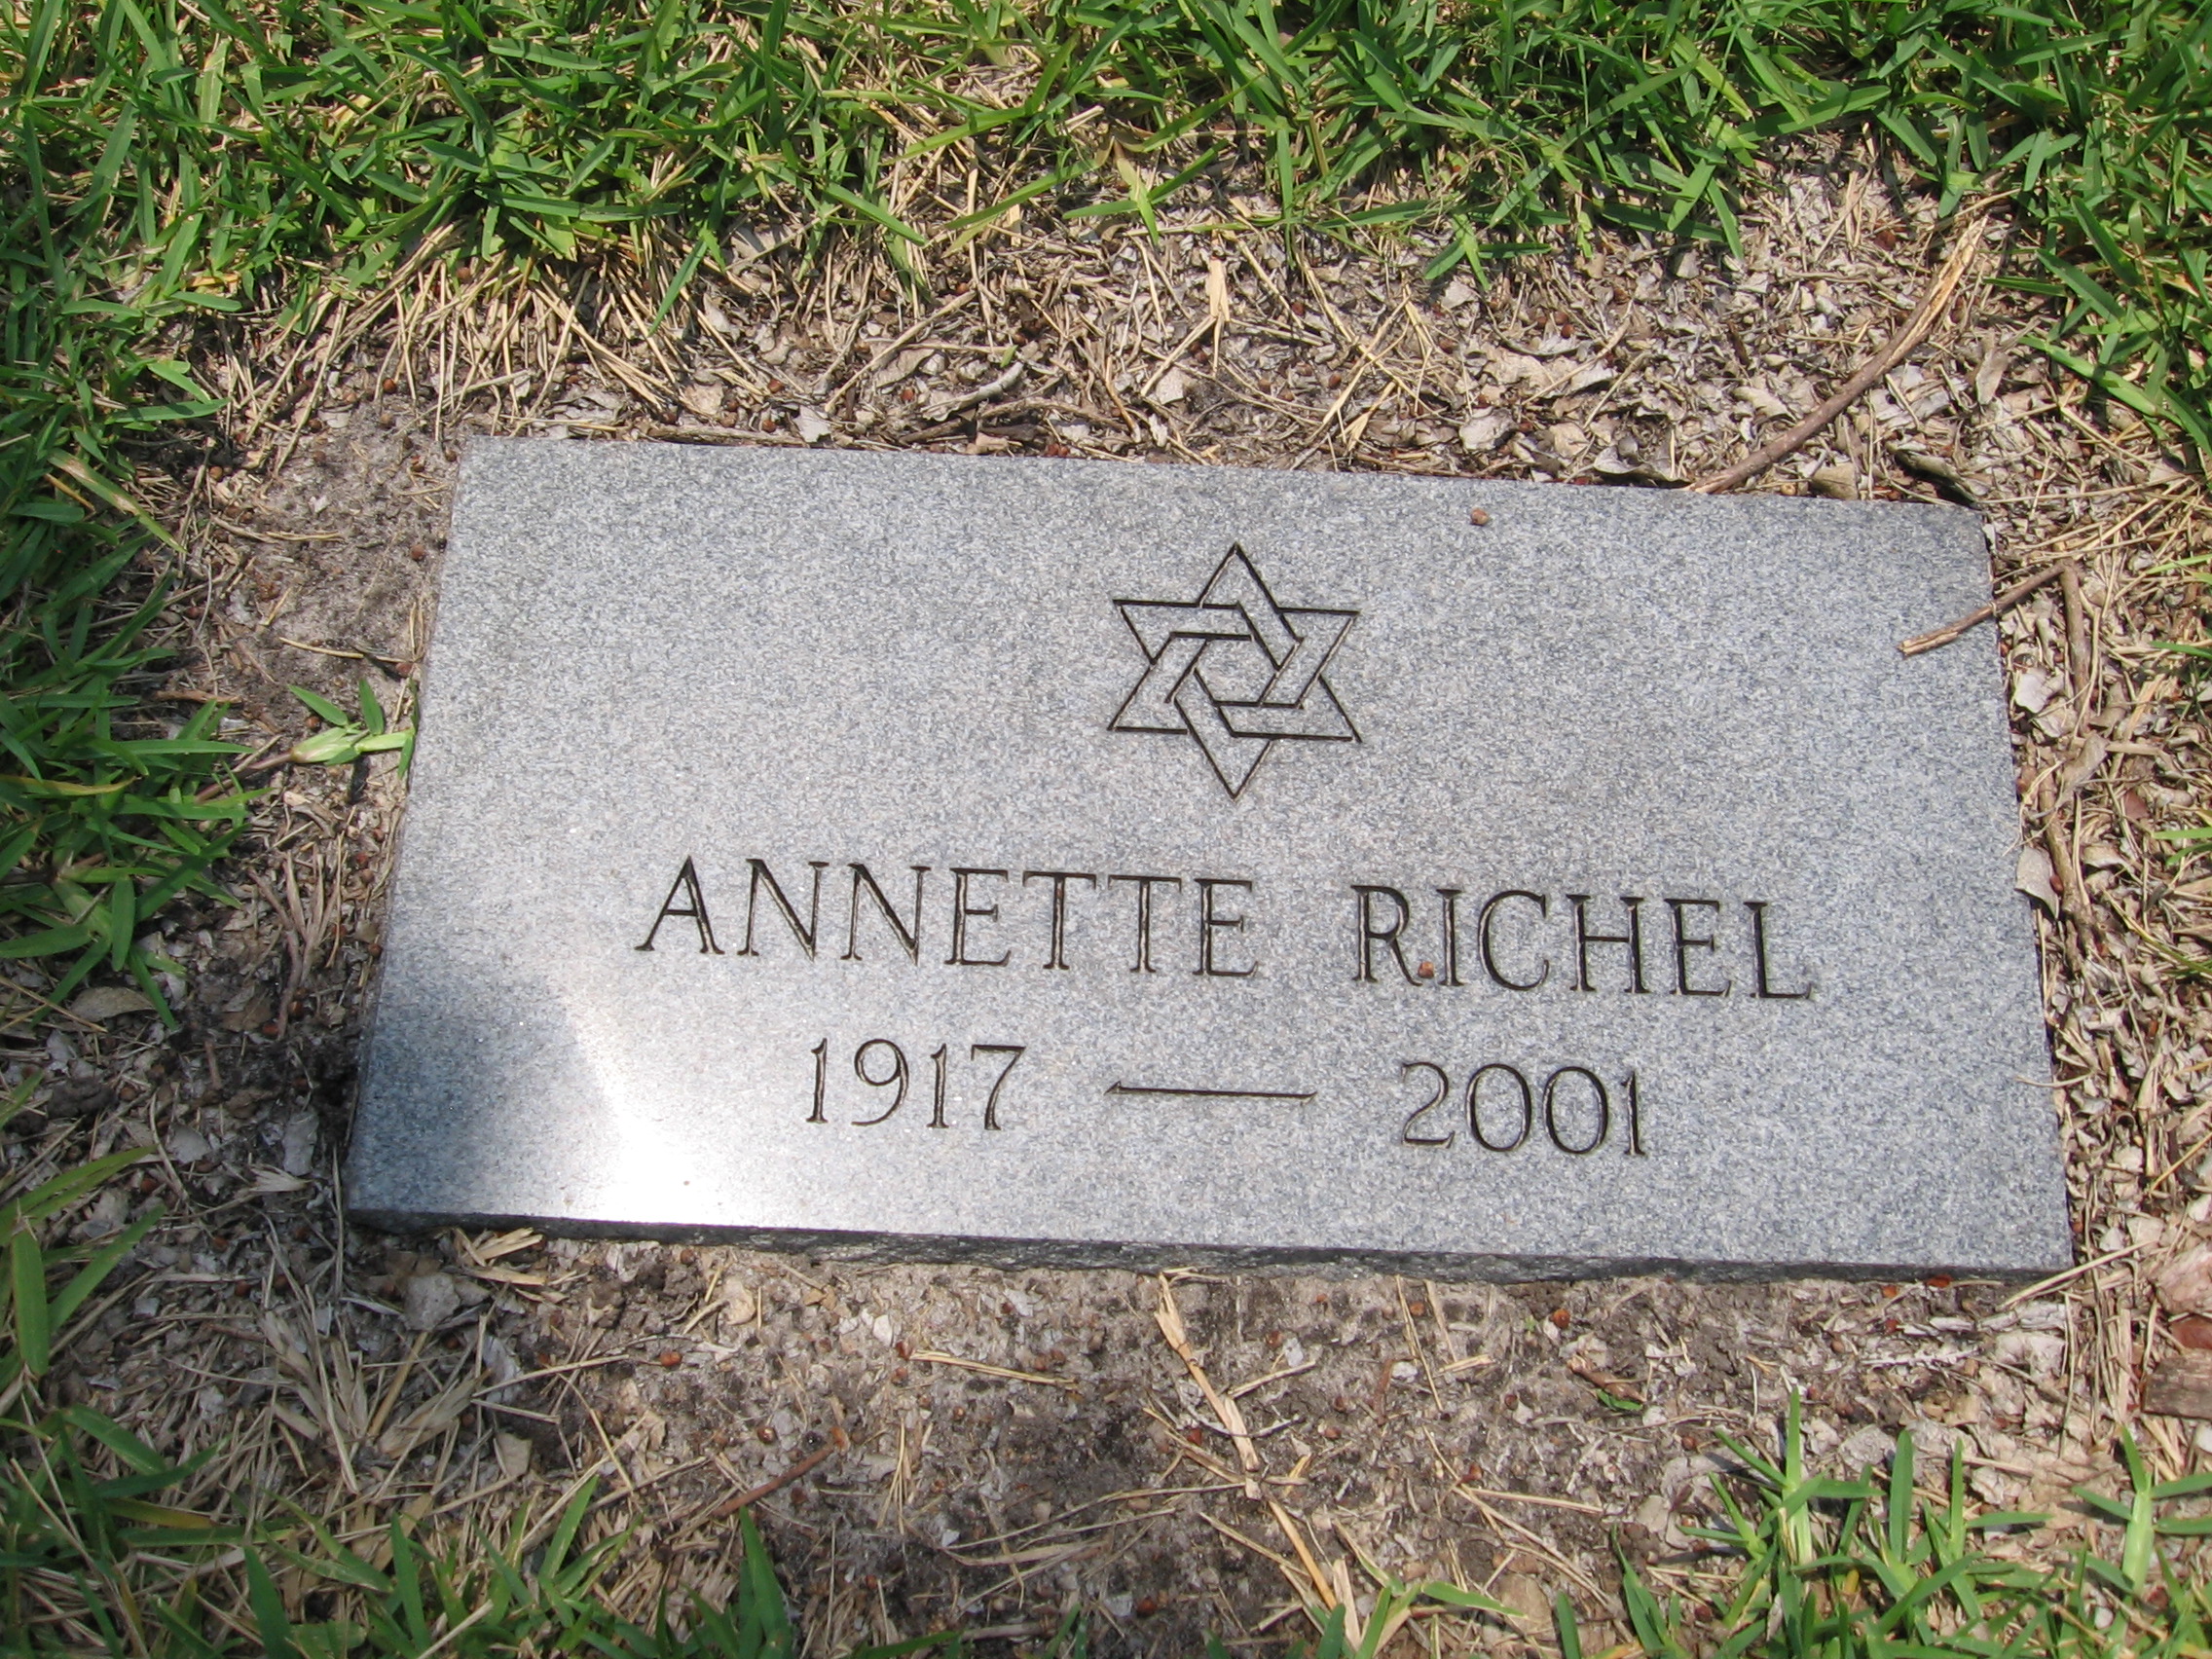 Annette Richel